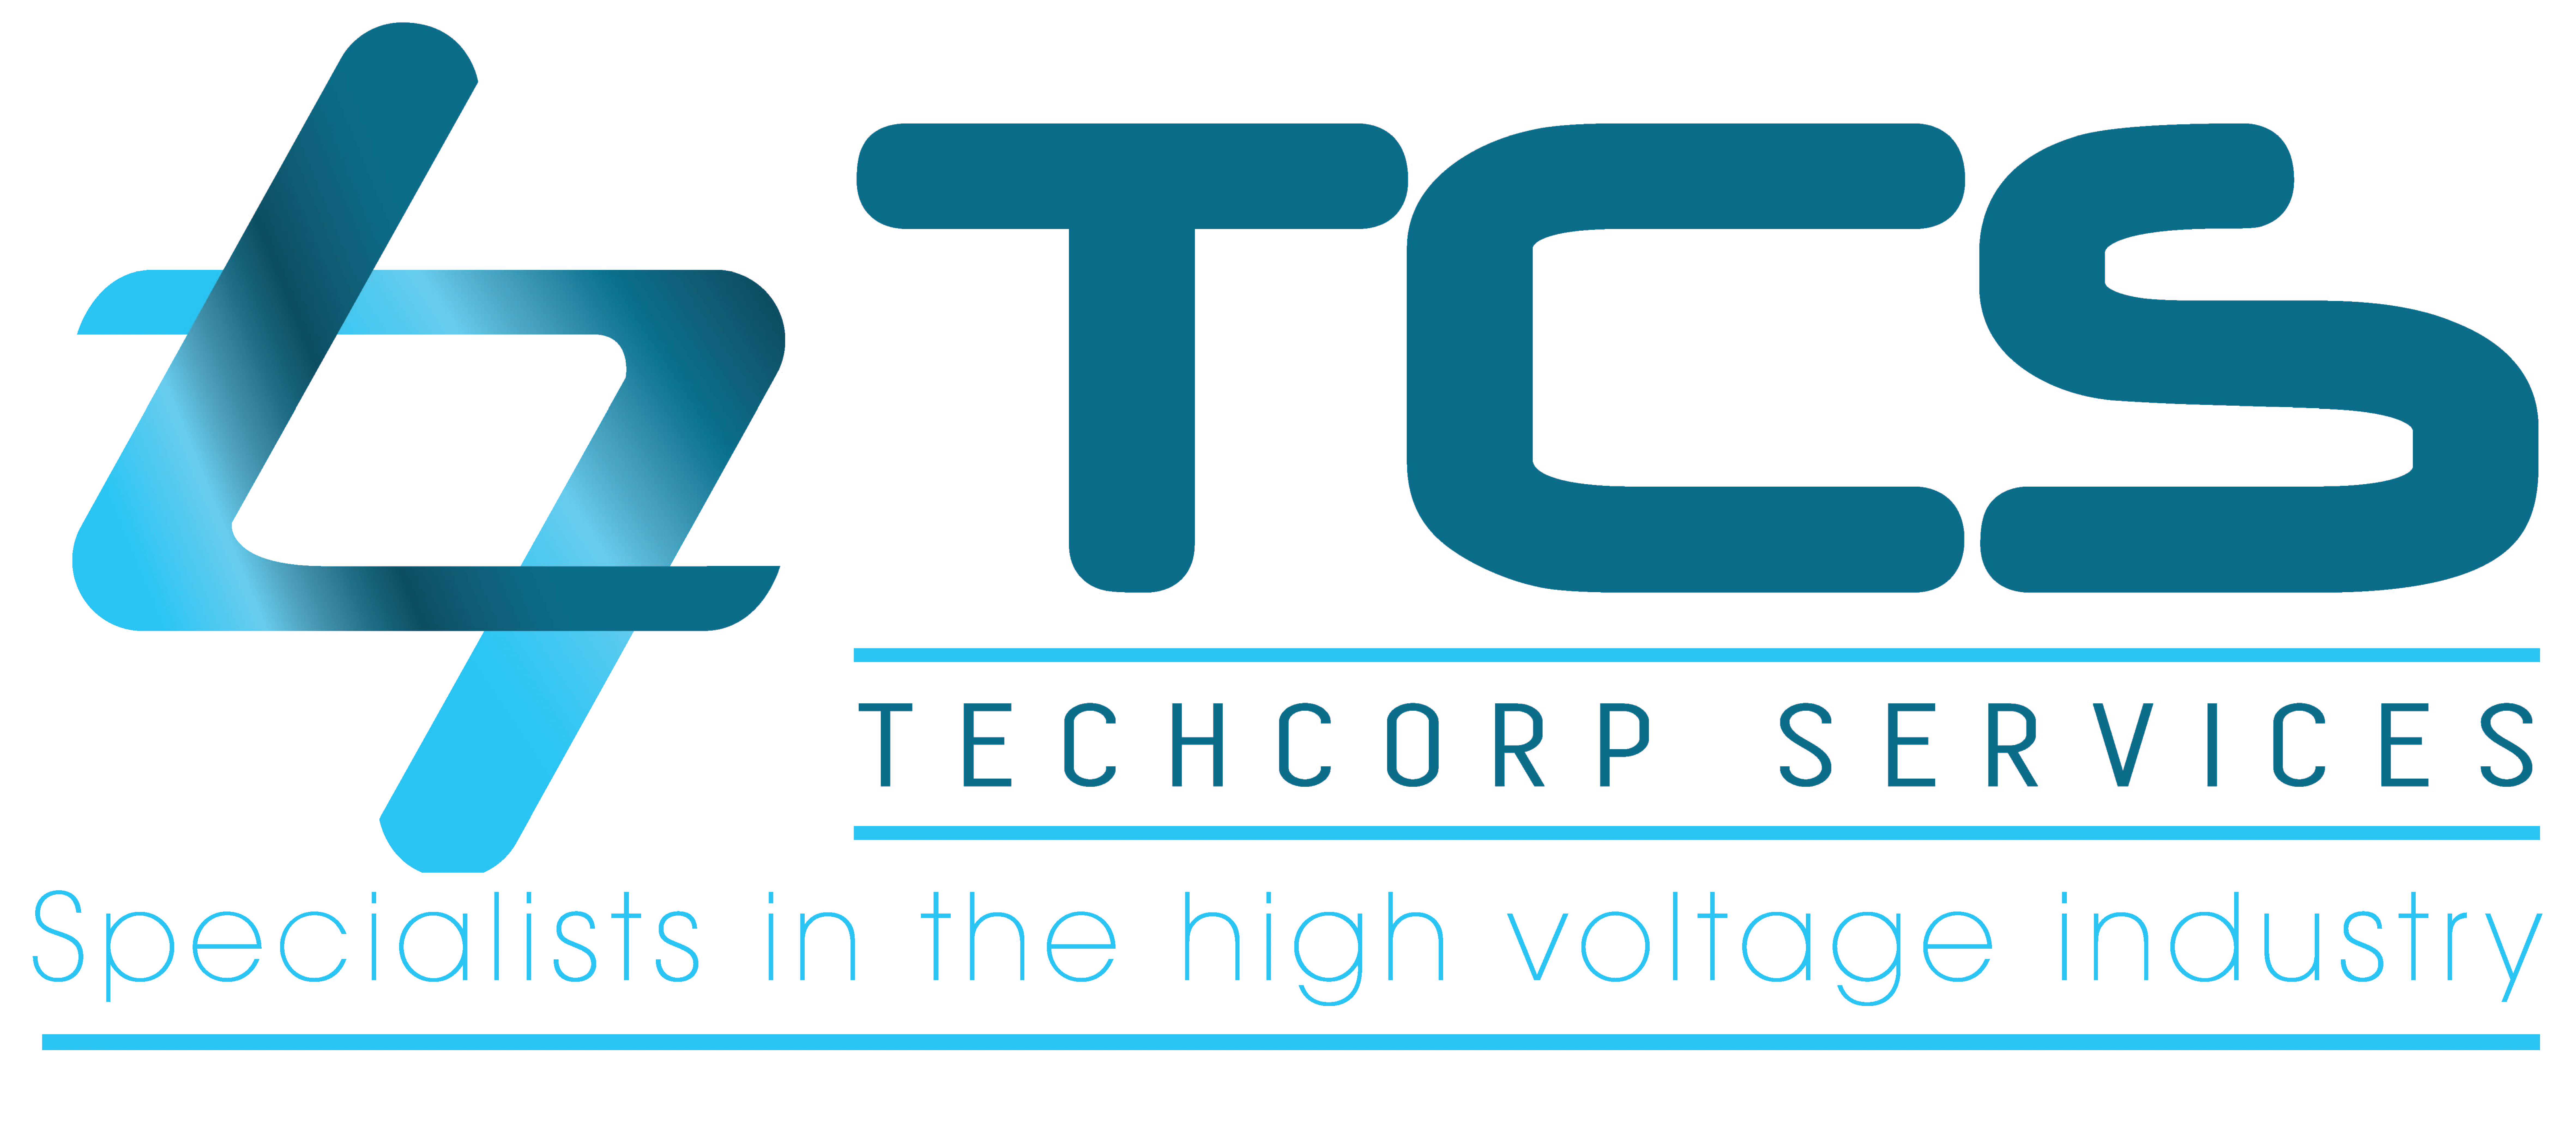 TechCorp Services